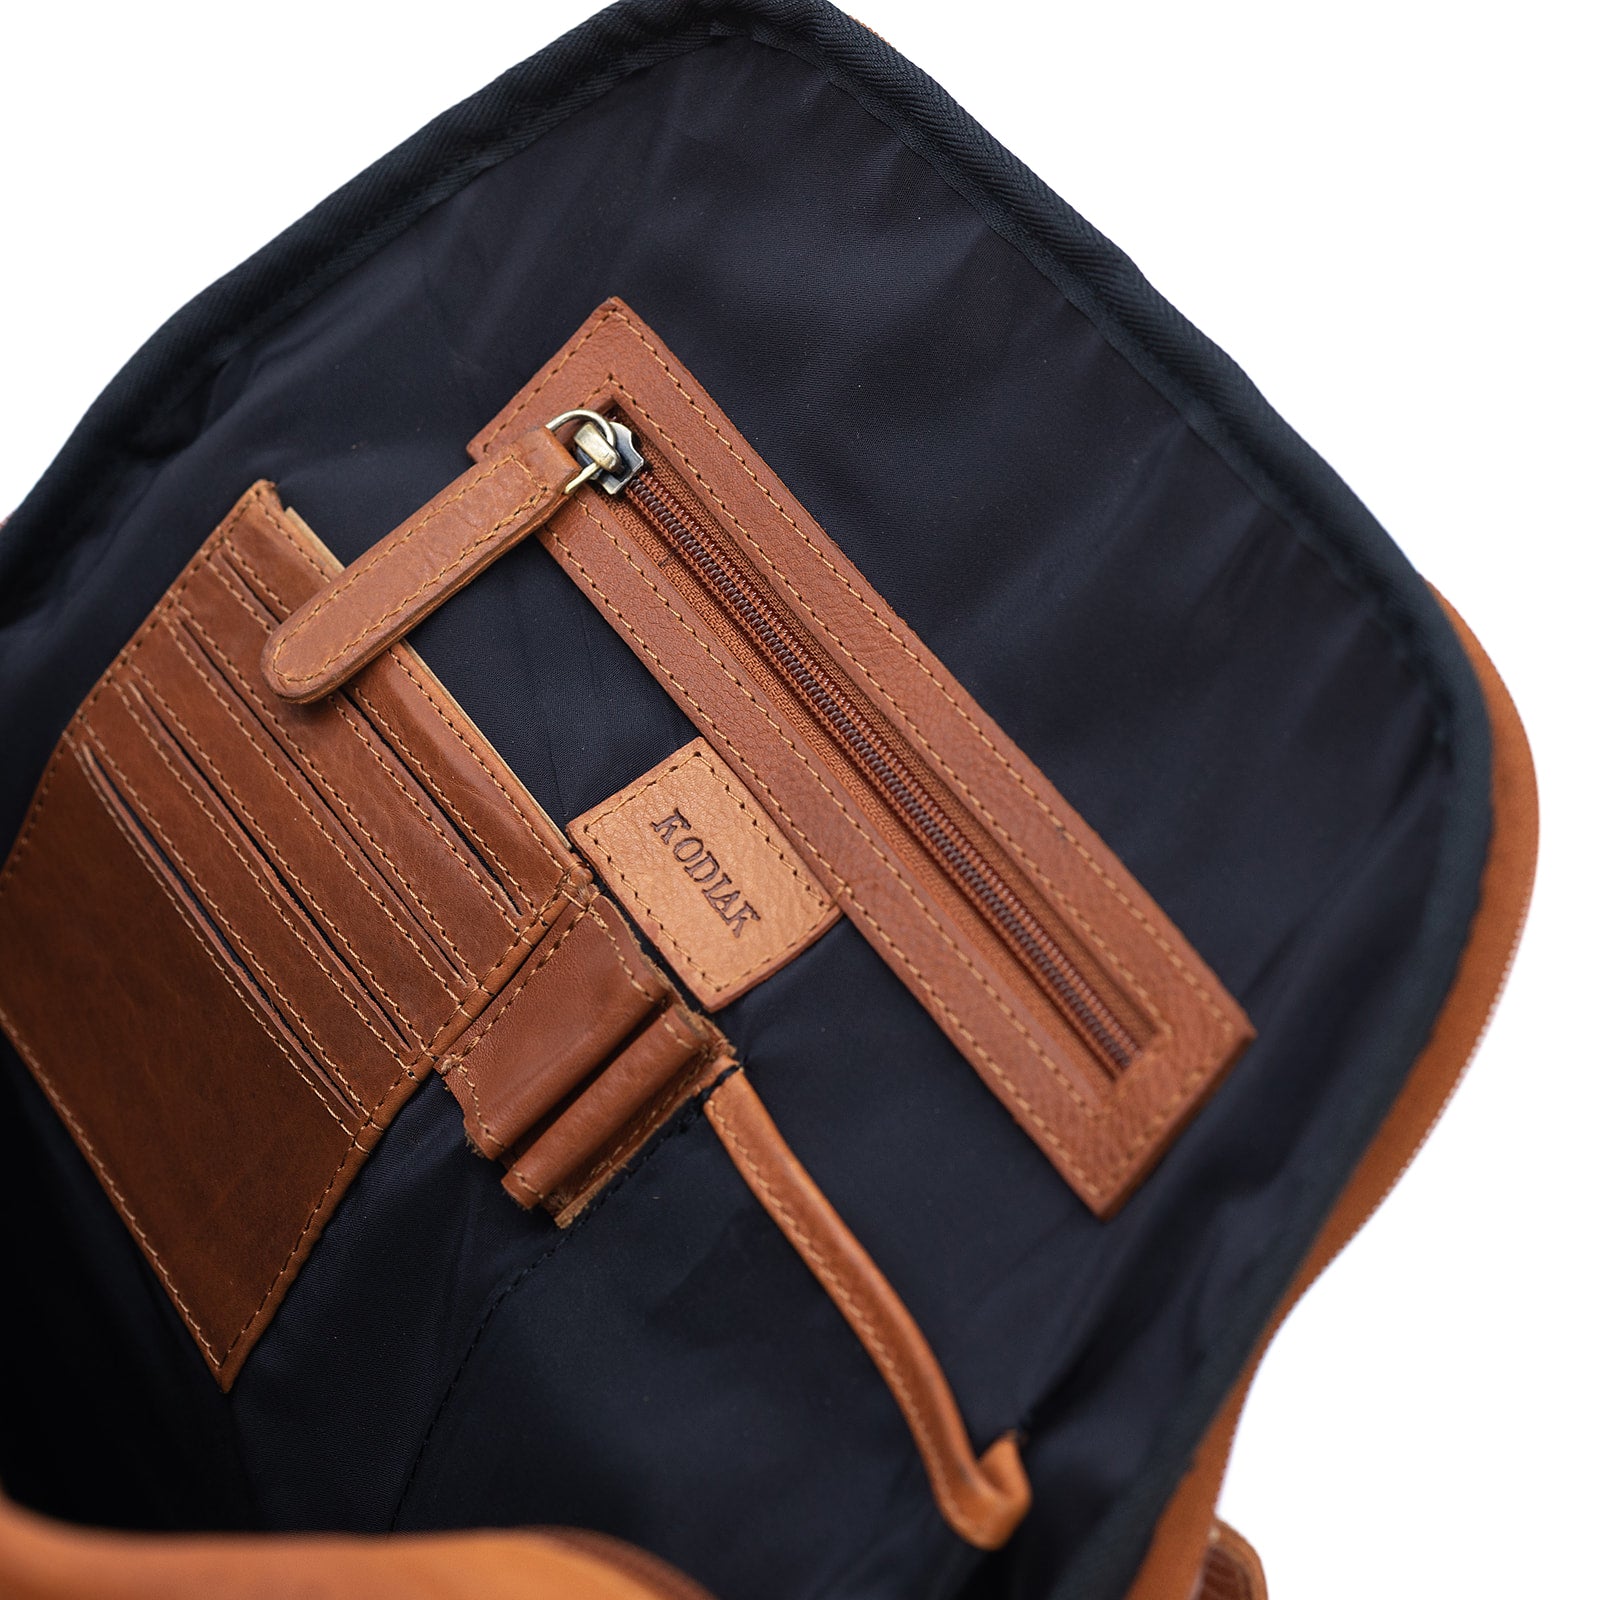 Katmai Leather Backpack